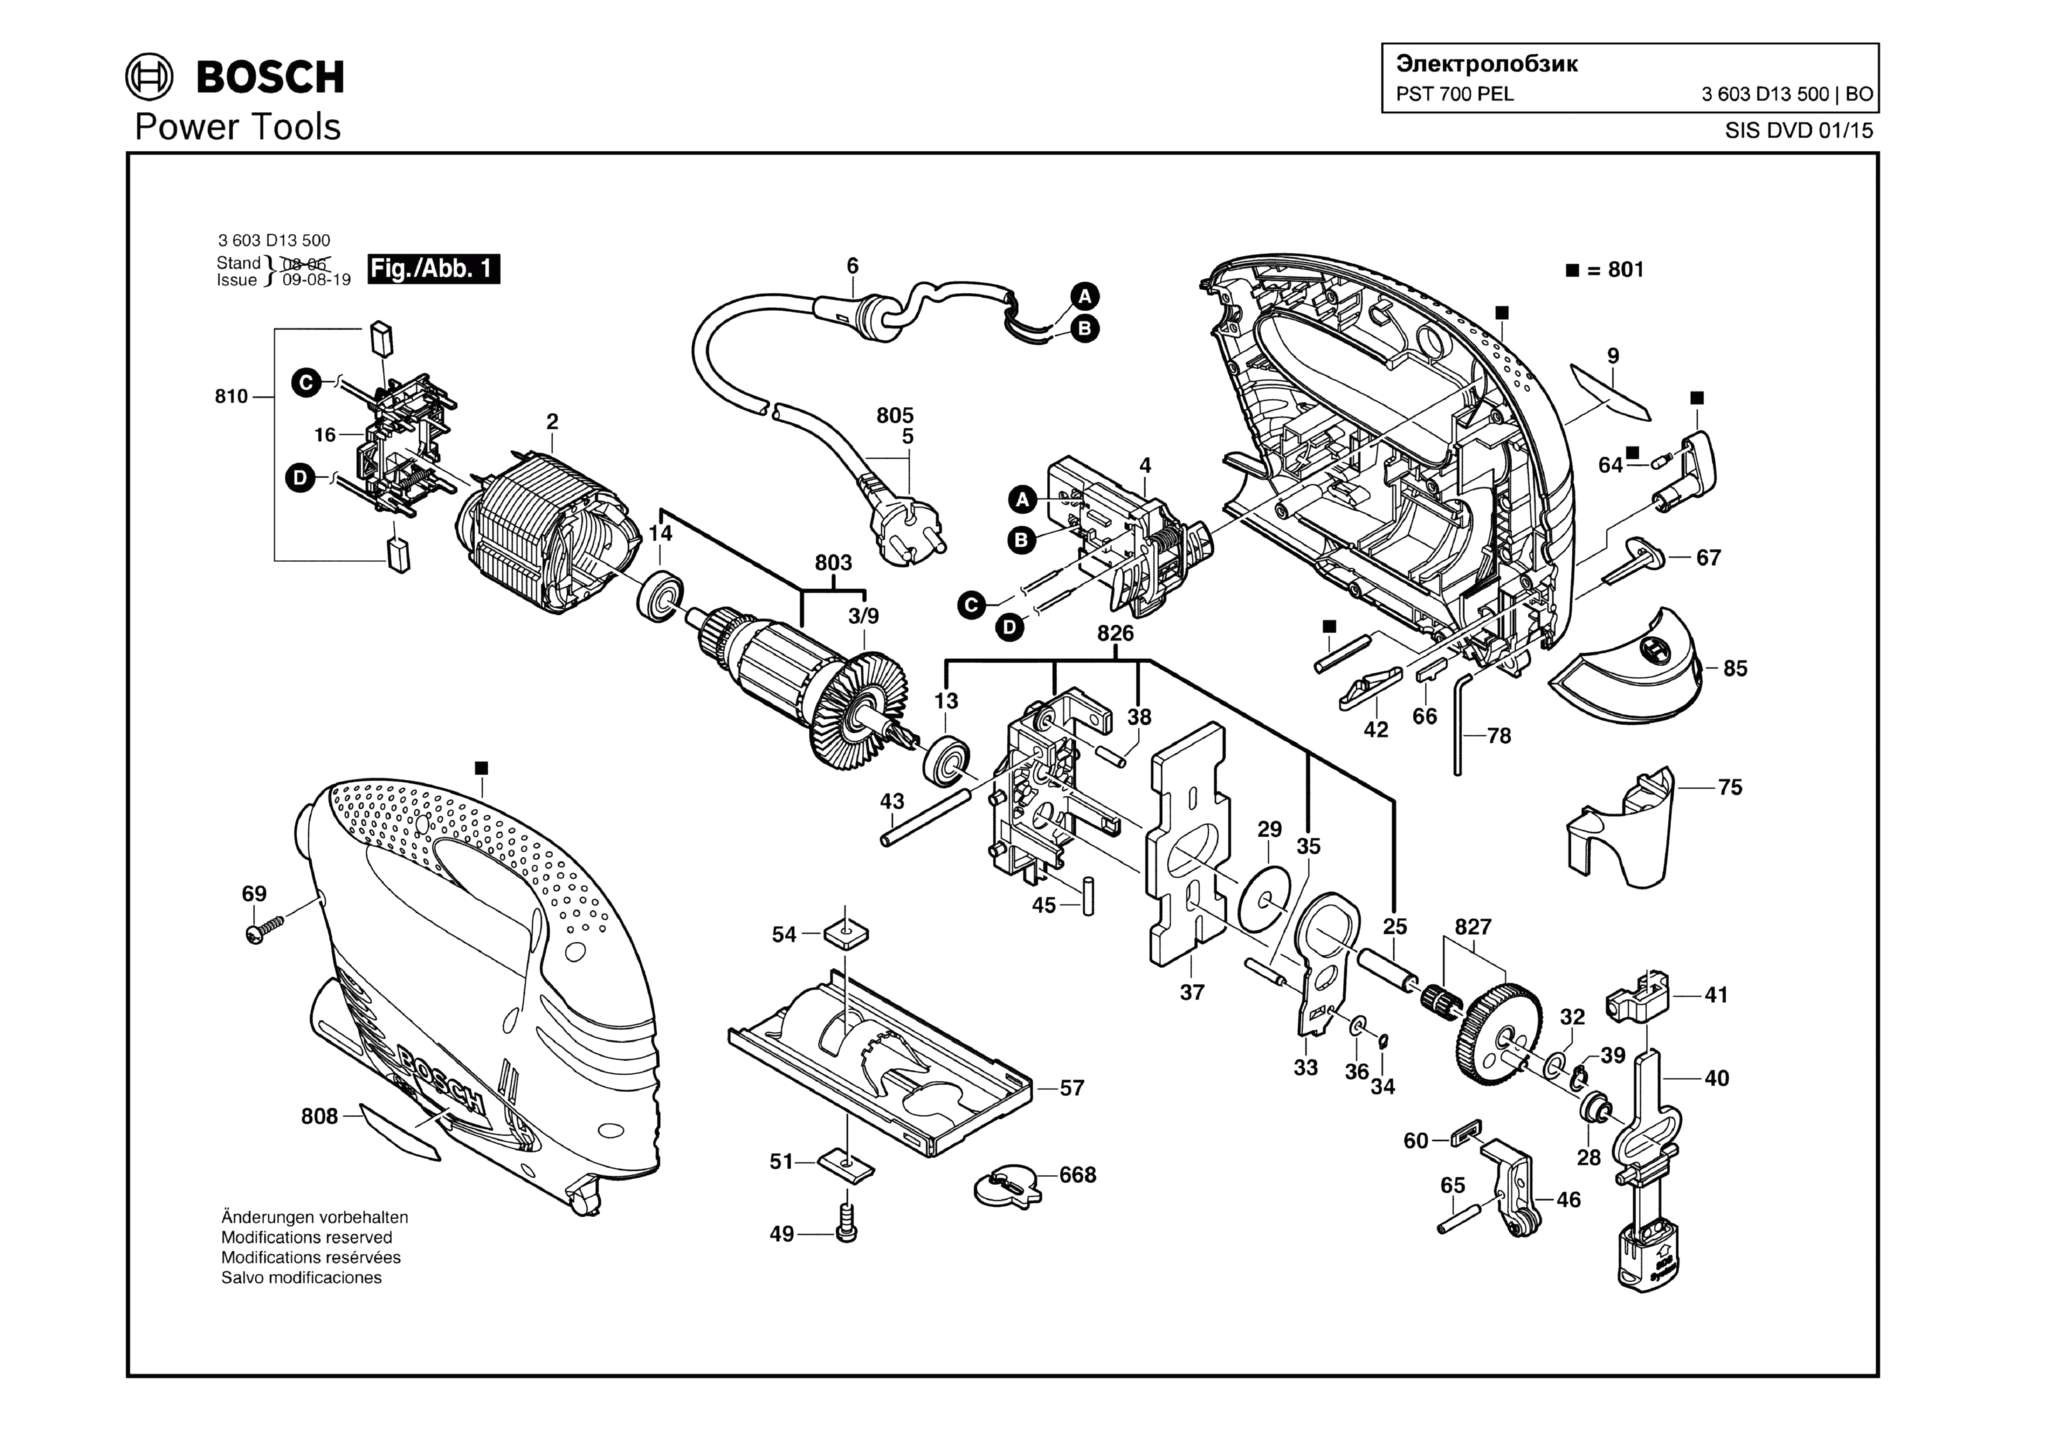 Запчасти, схема и деталировка Bosch PST 700 PEL (ТИП 3603D13500)